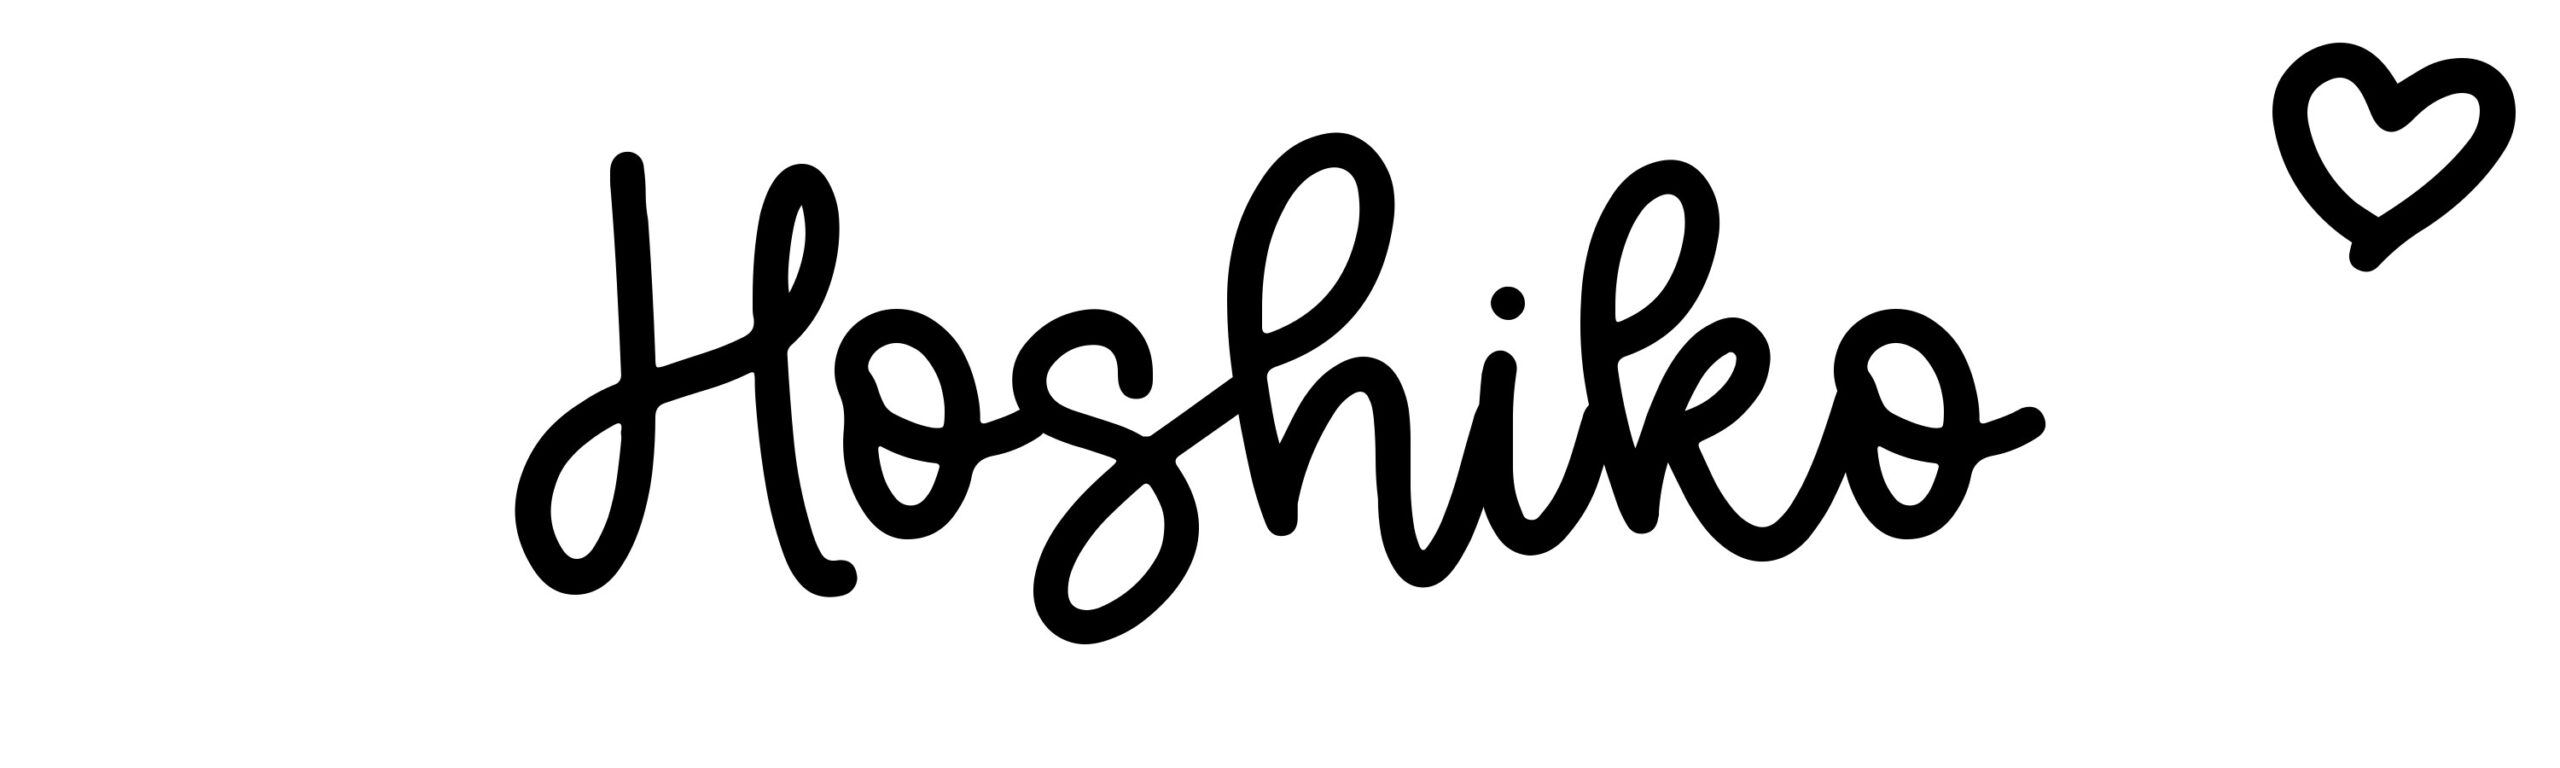 Hoshiko - anime collection vn (khoidangtanthuy) - Profile | Pinterest